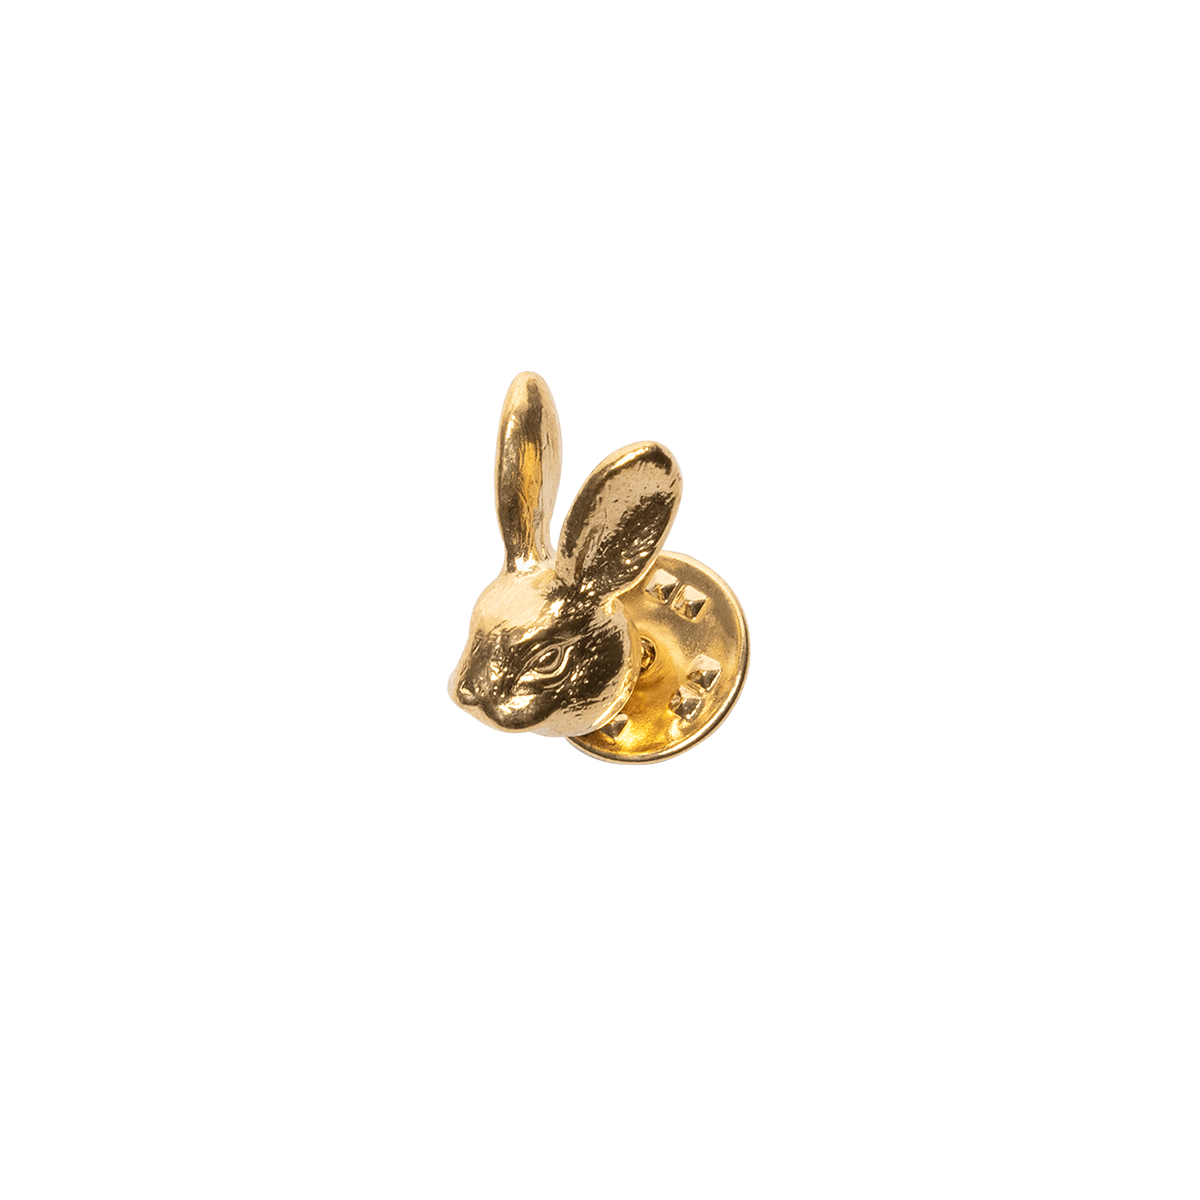 Penajewels Animals rabbit head